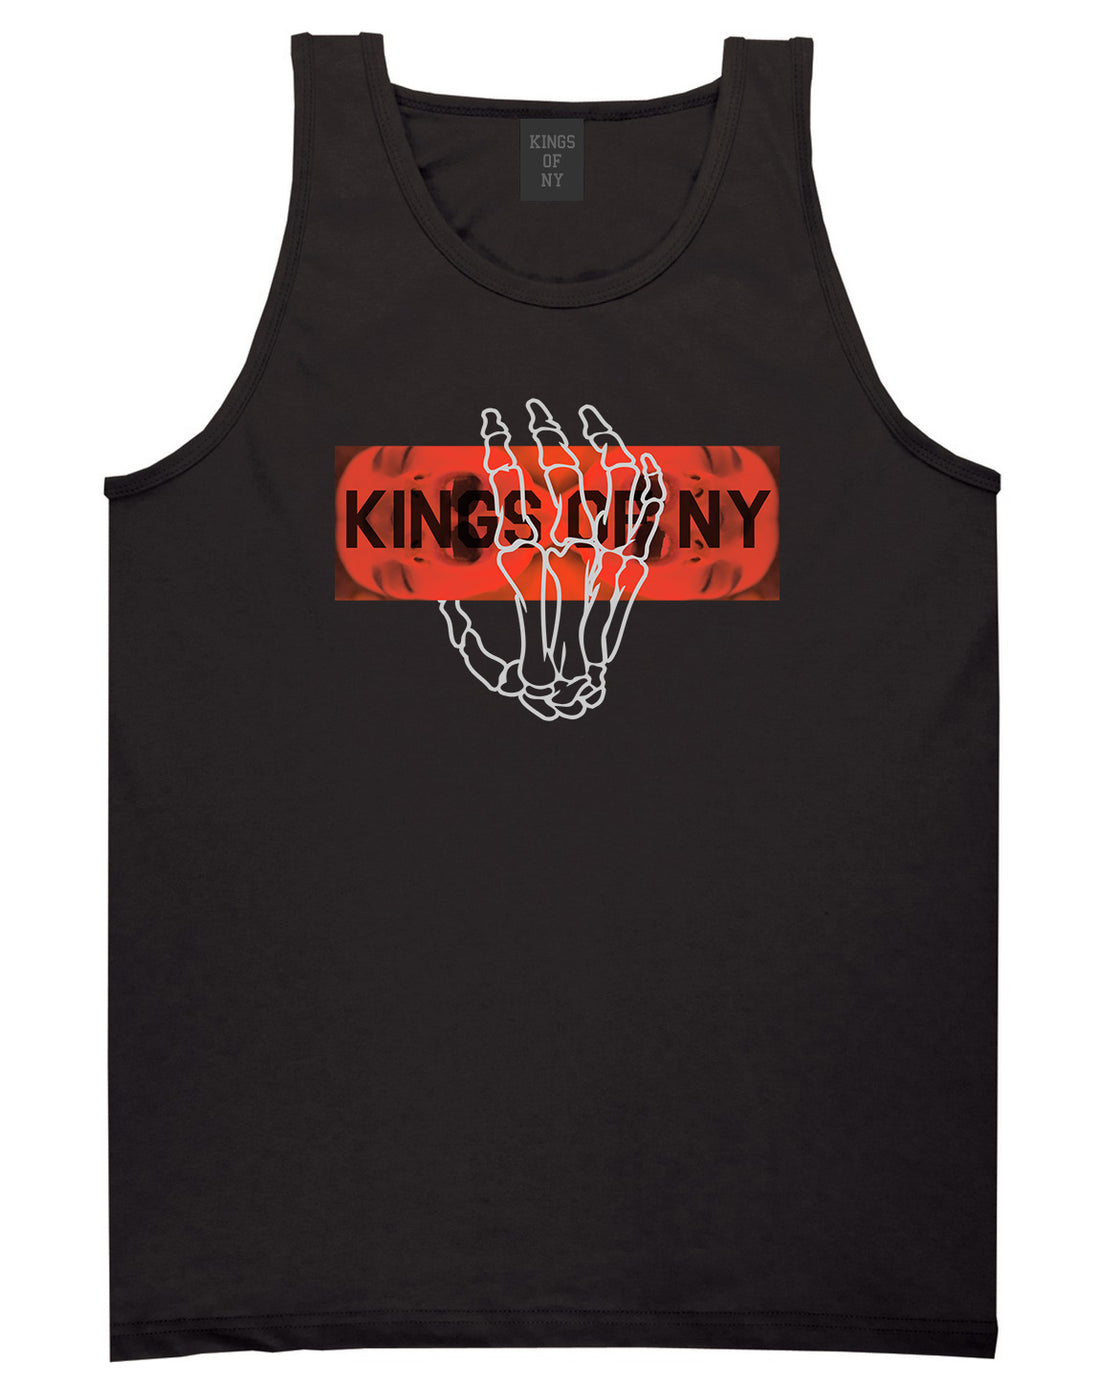 Dead Inside Skeleton Hand Mens Tank Top Shirt Black by Kings Of NY